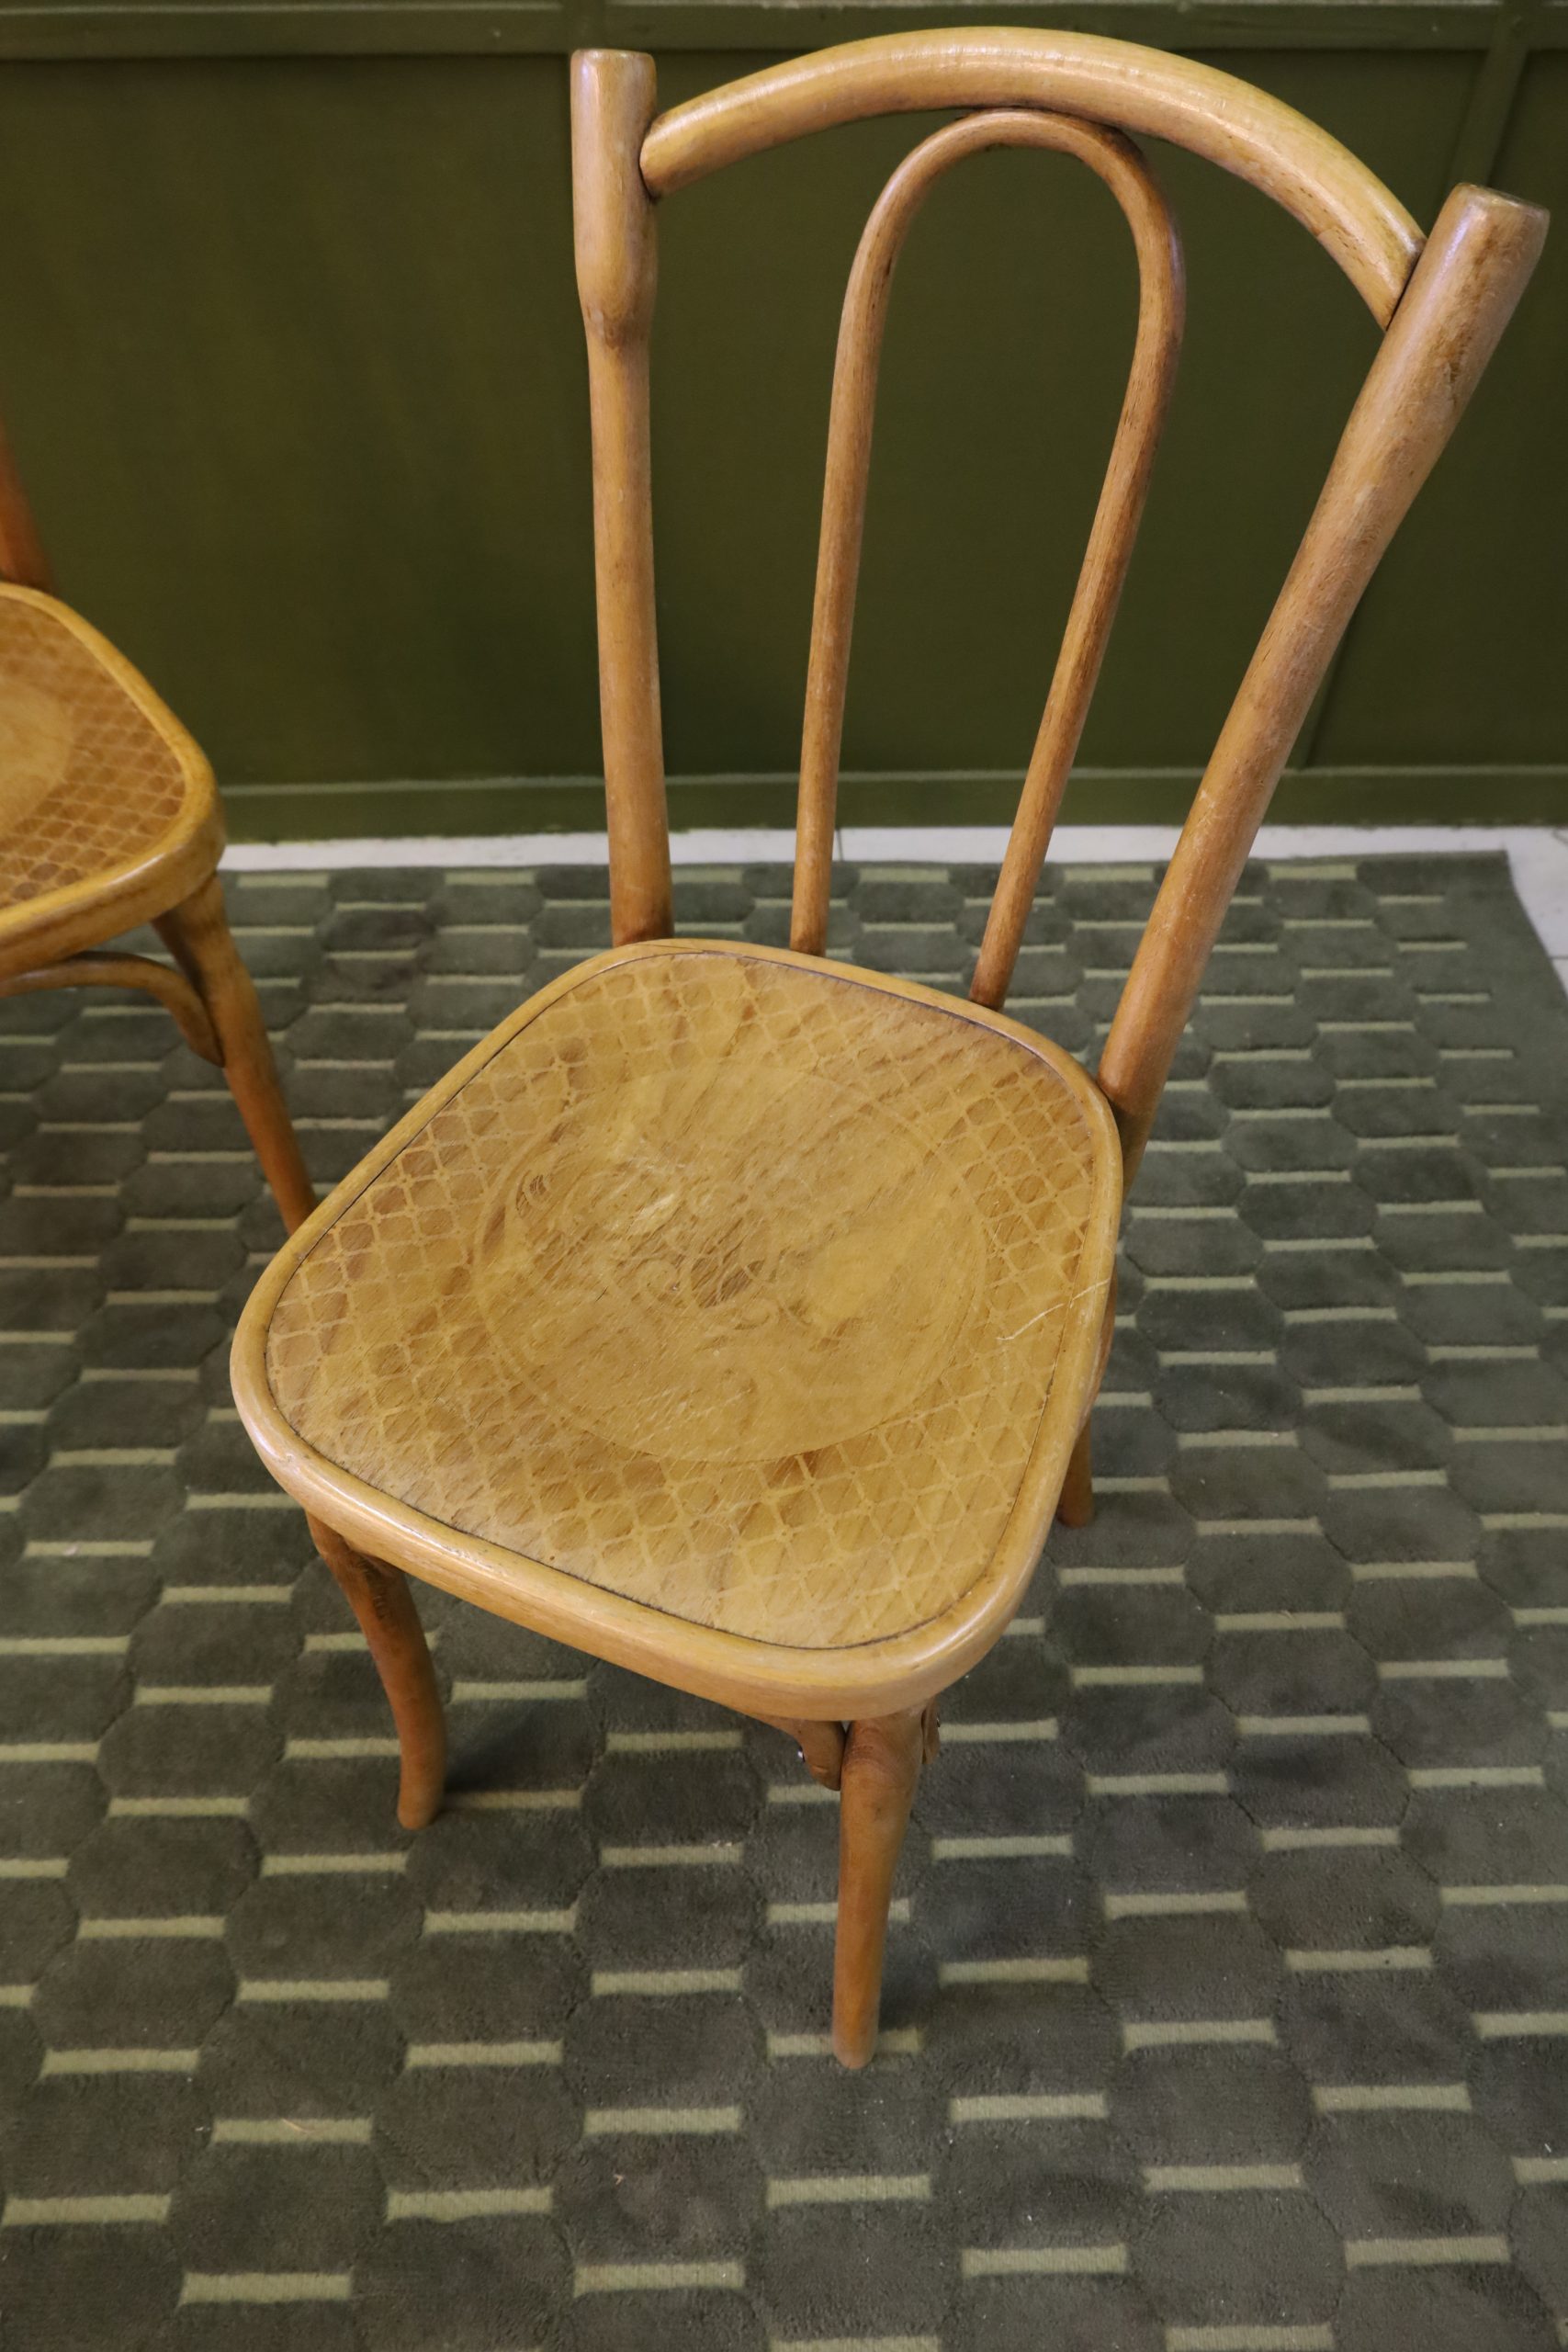 Bentwood chairs by Jacob & Josef Kohn - from 1900 - 10 pcs.